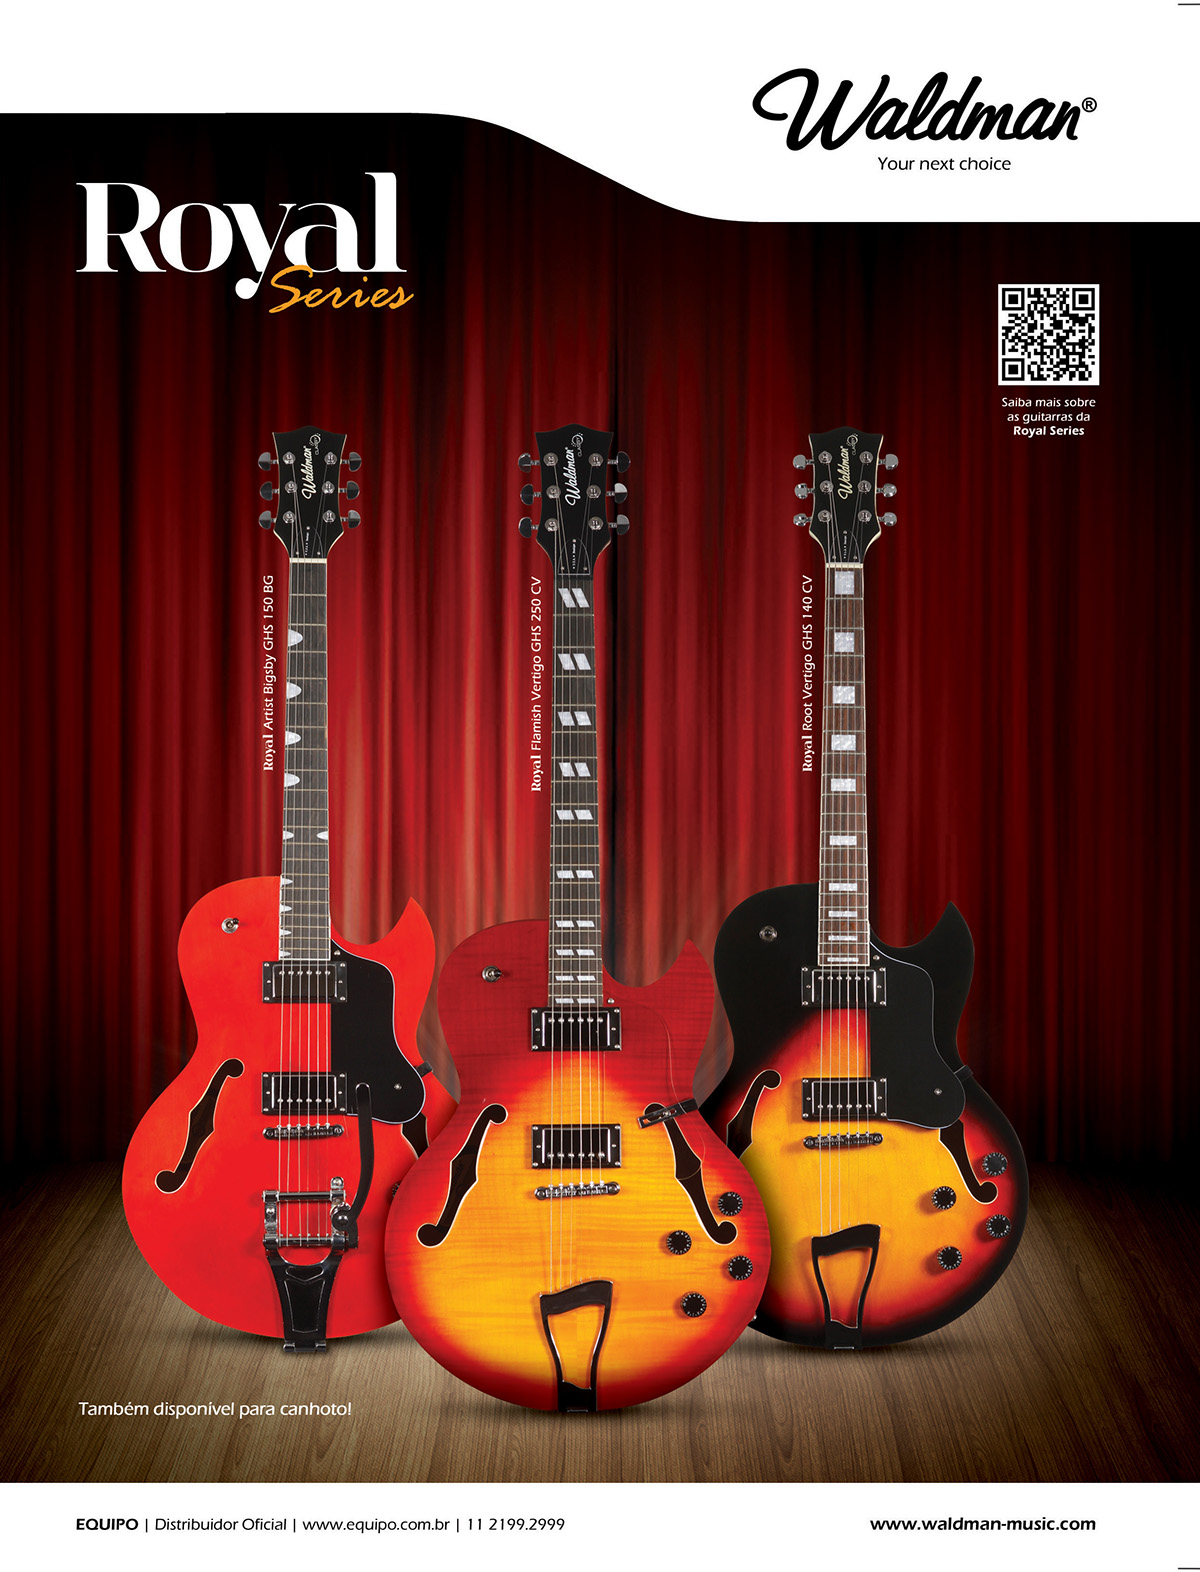 #guitar   #guitarras #royalseries #music